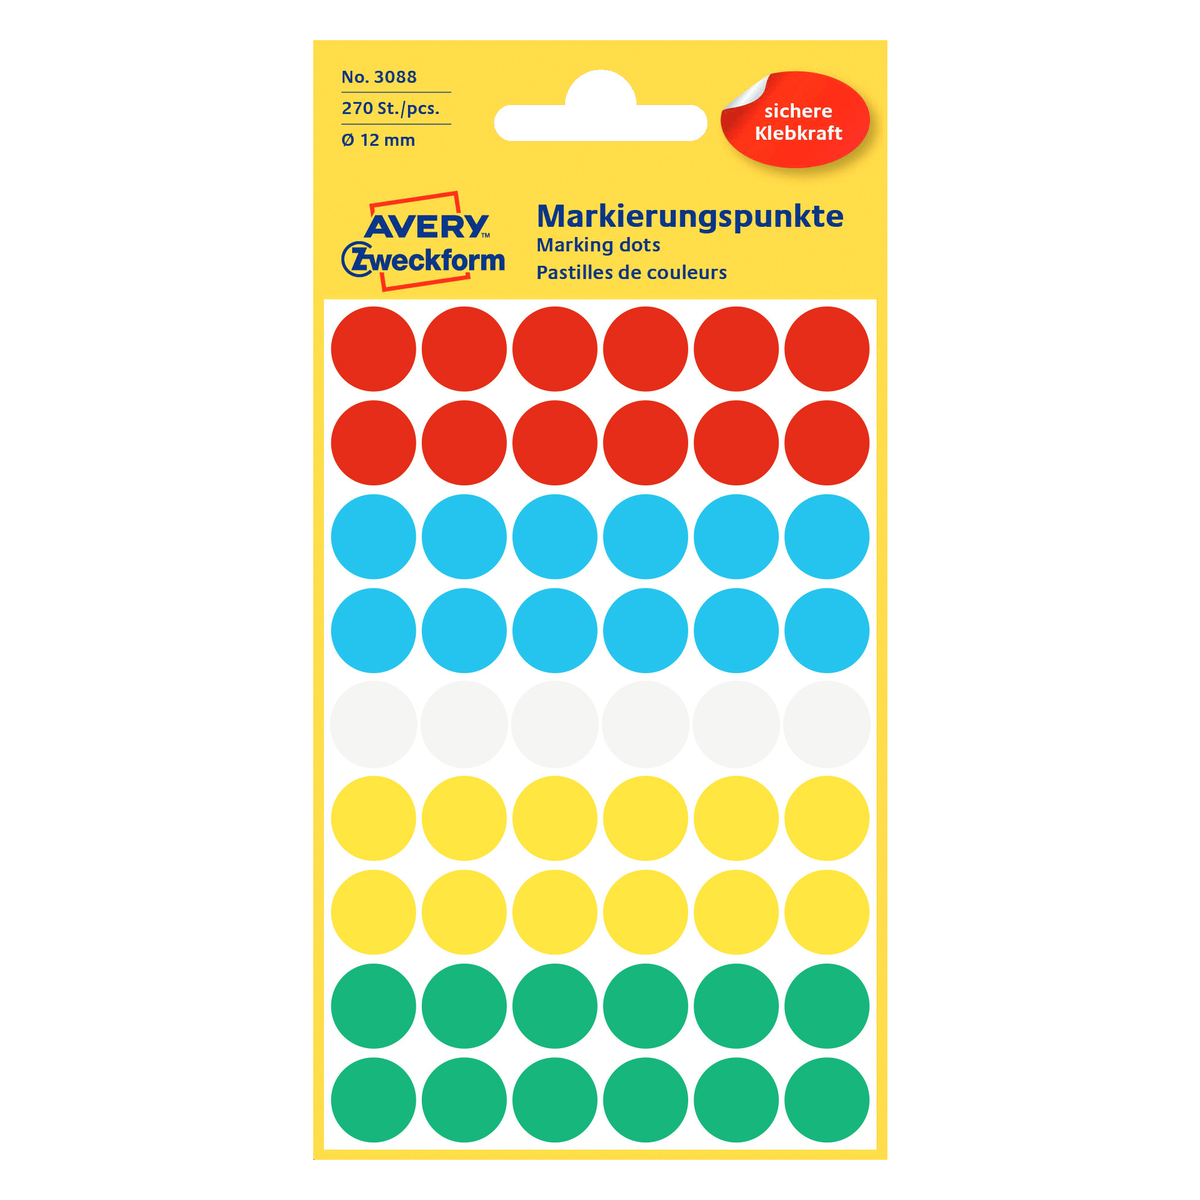 Avery Dot Stickers,12mm, 270 Pcs, Multi Color, 3088